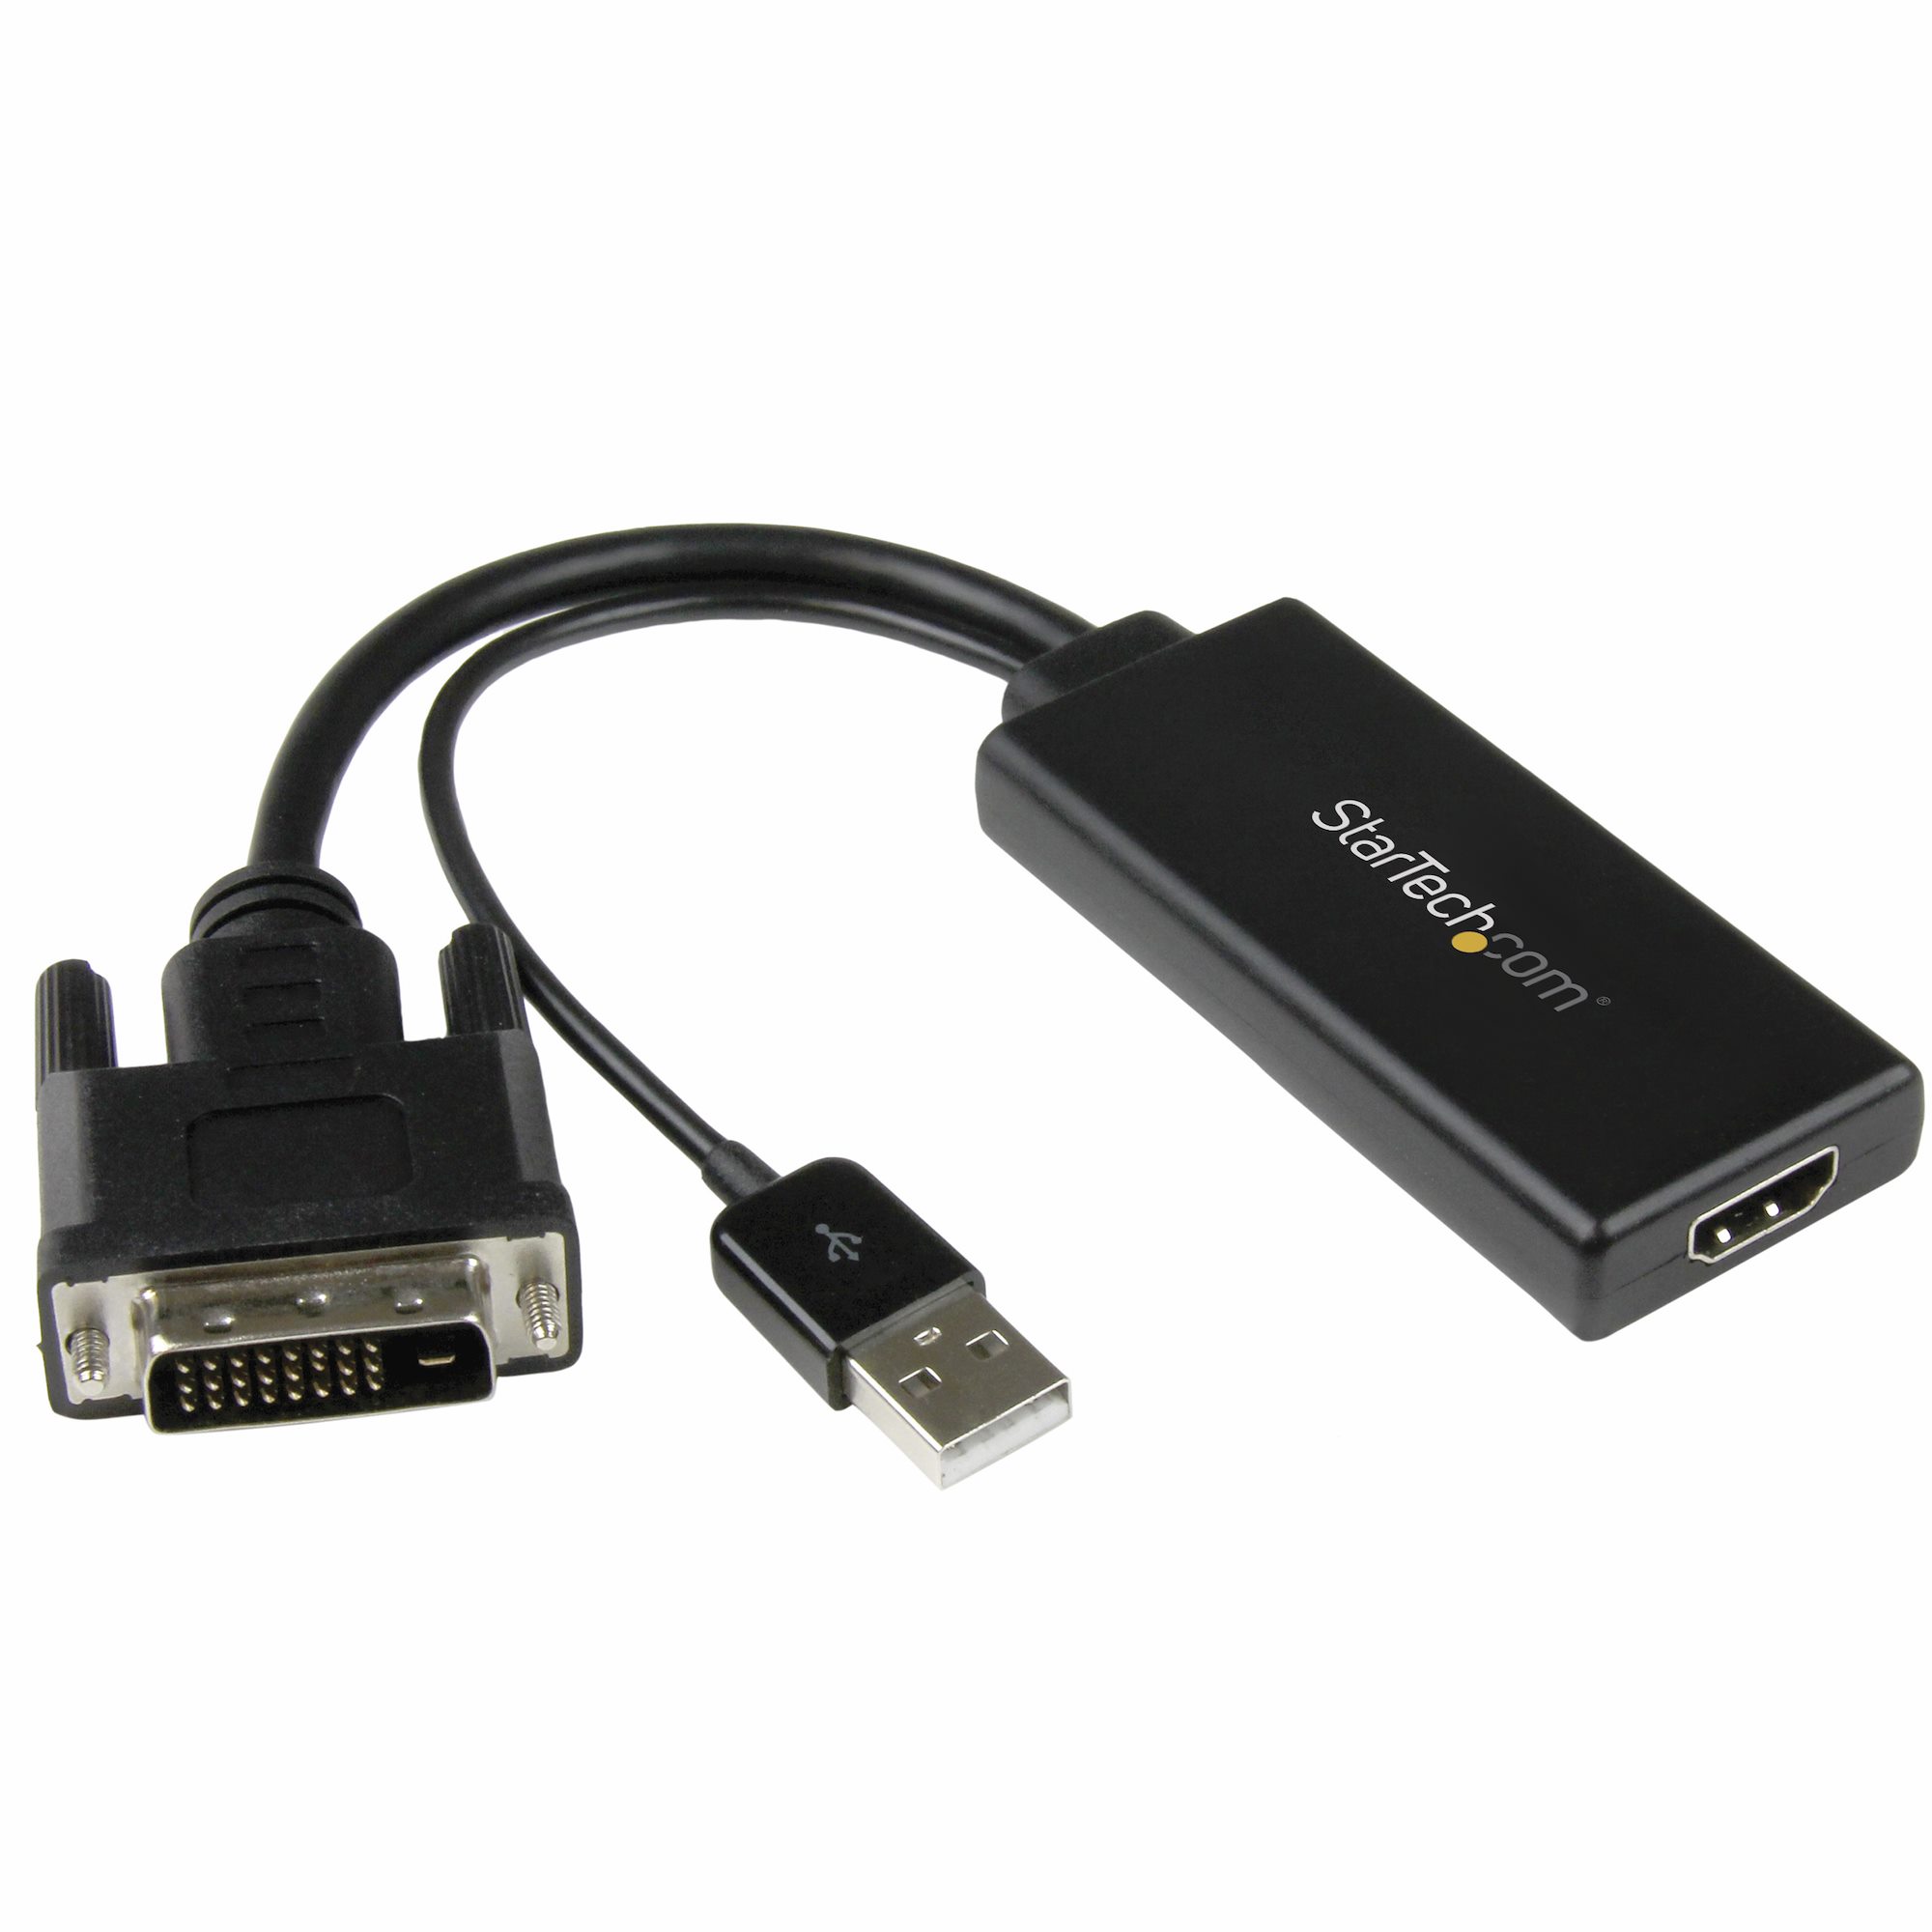 MX HDMI Adapter 0 m DVI-D (18+1) TO HDMI 19 PIN Female ADAPTOR FOR HDTV  LAPTOP 1080 FULL HD - MX 